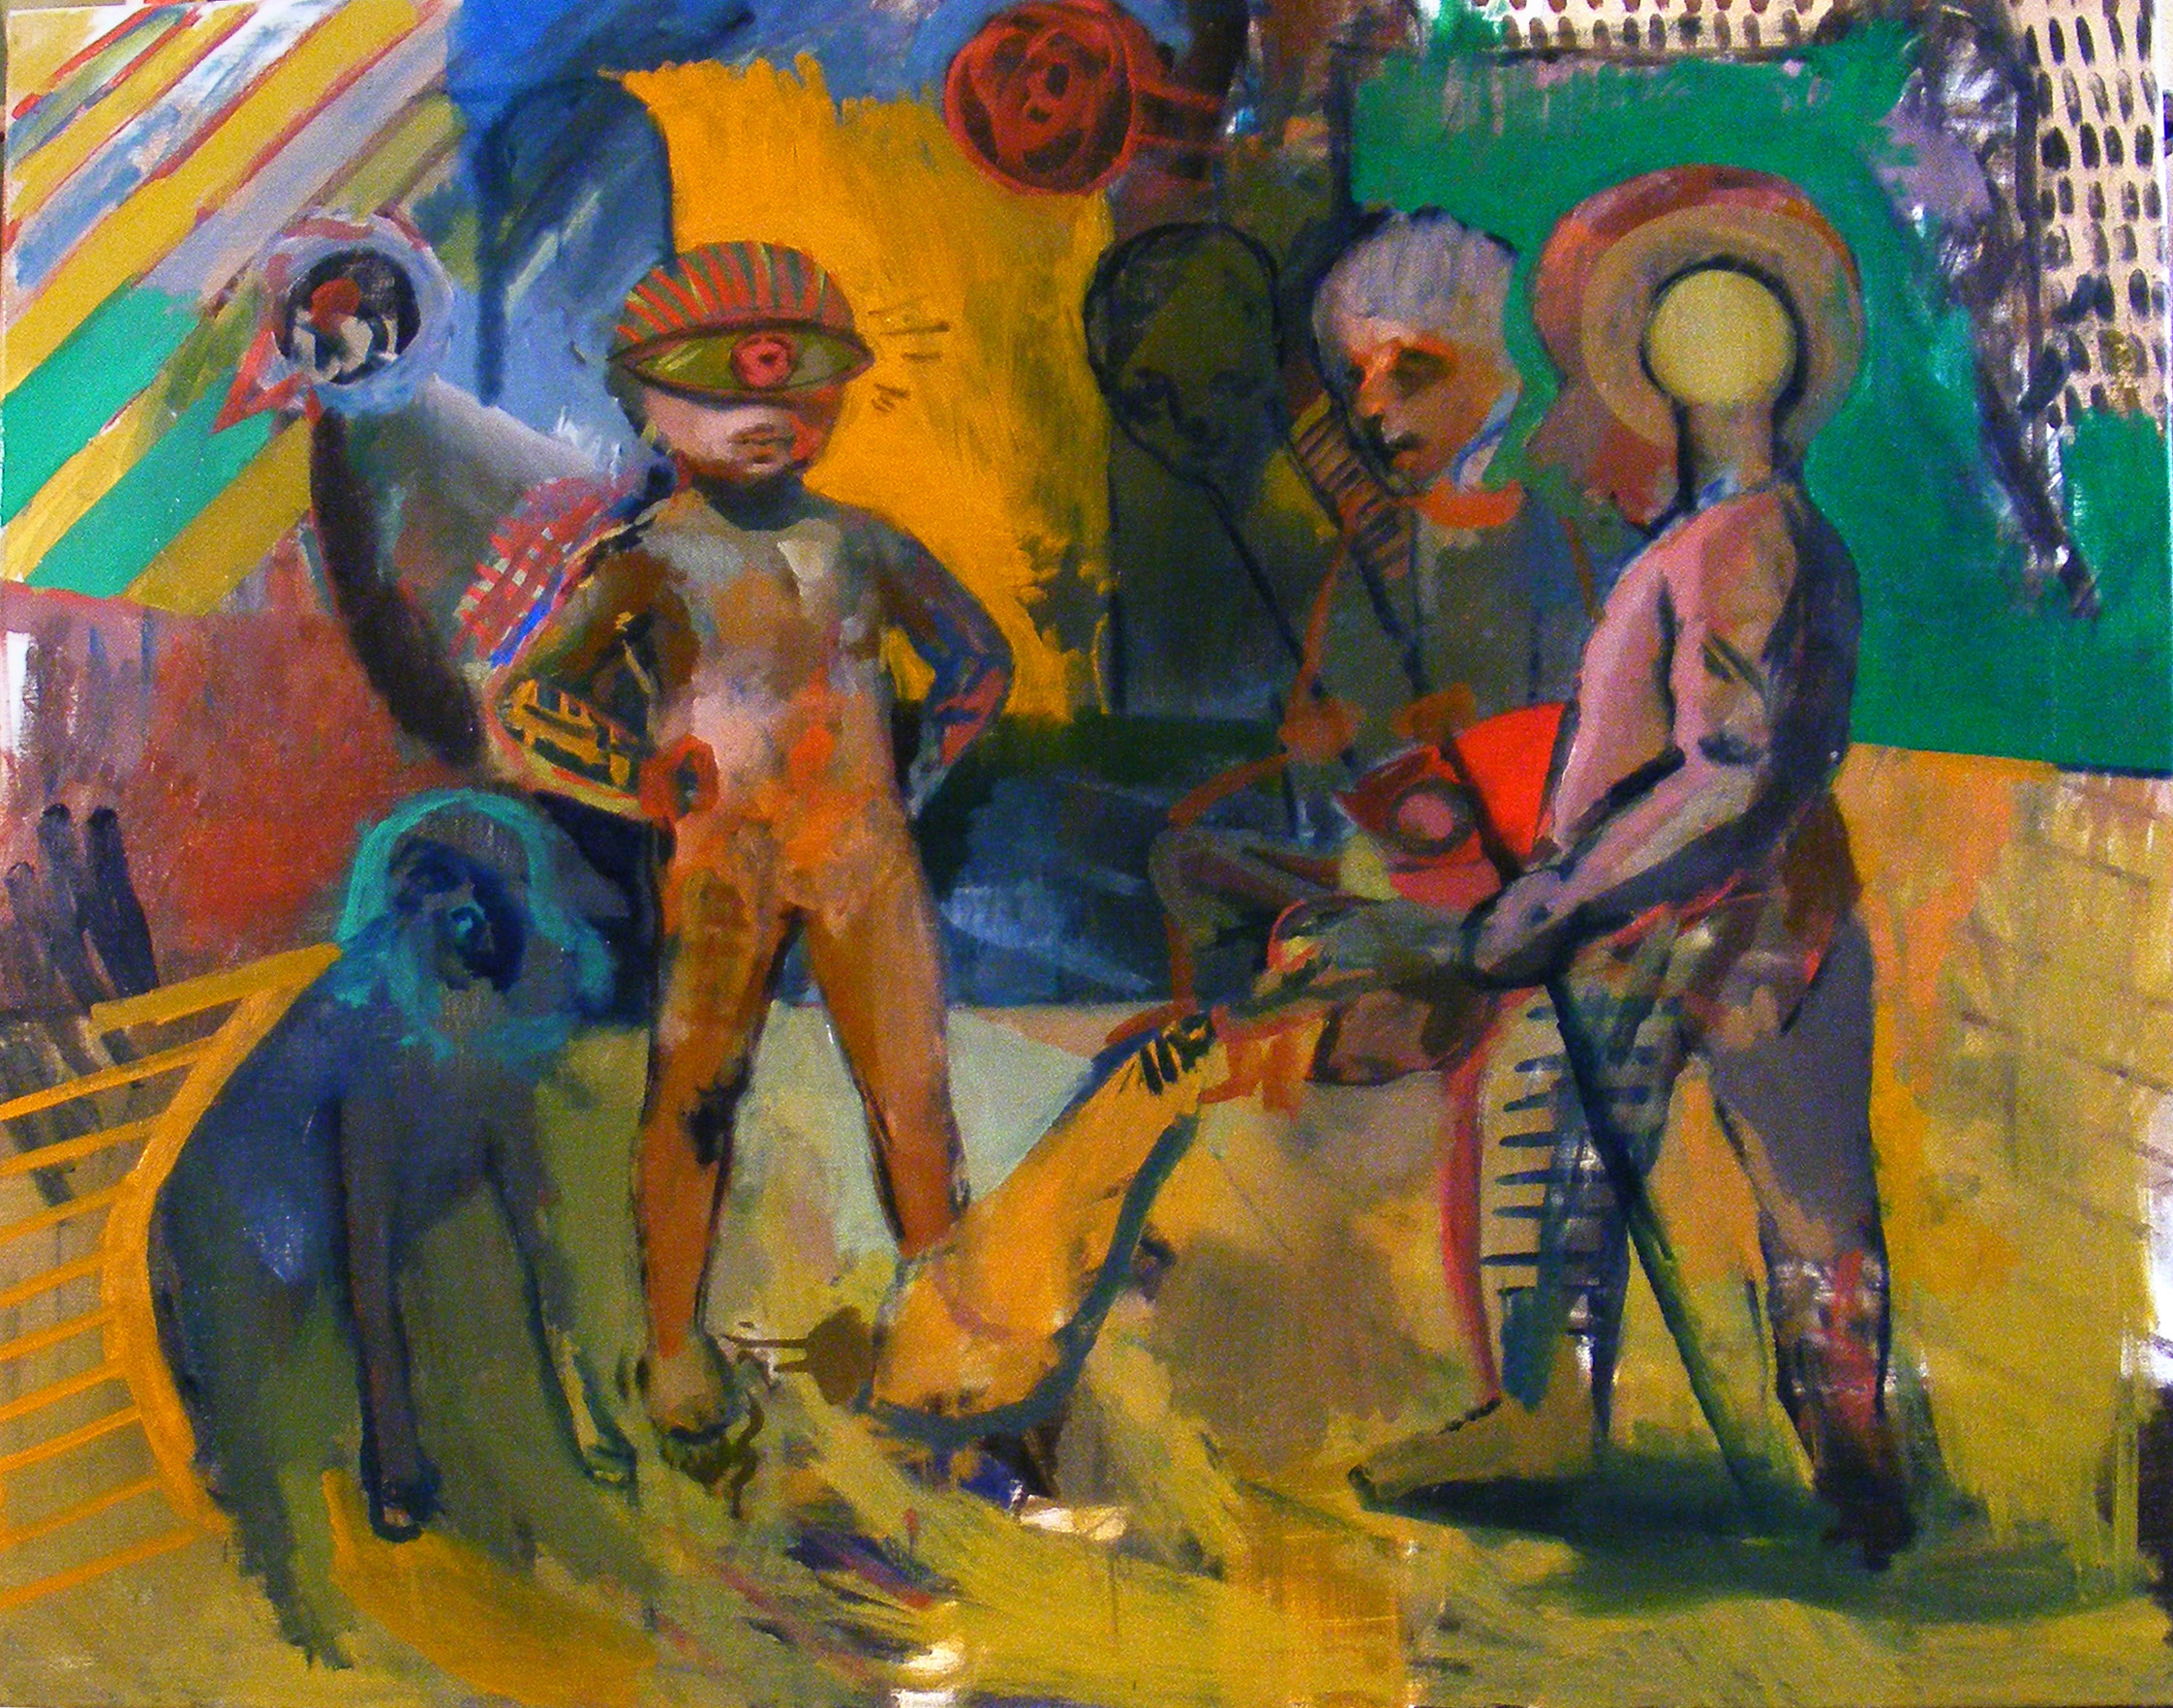    "Untitled"&nbsp;2009   Oil on canvas 